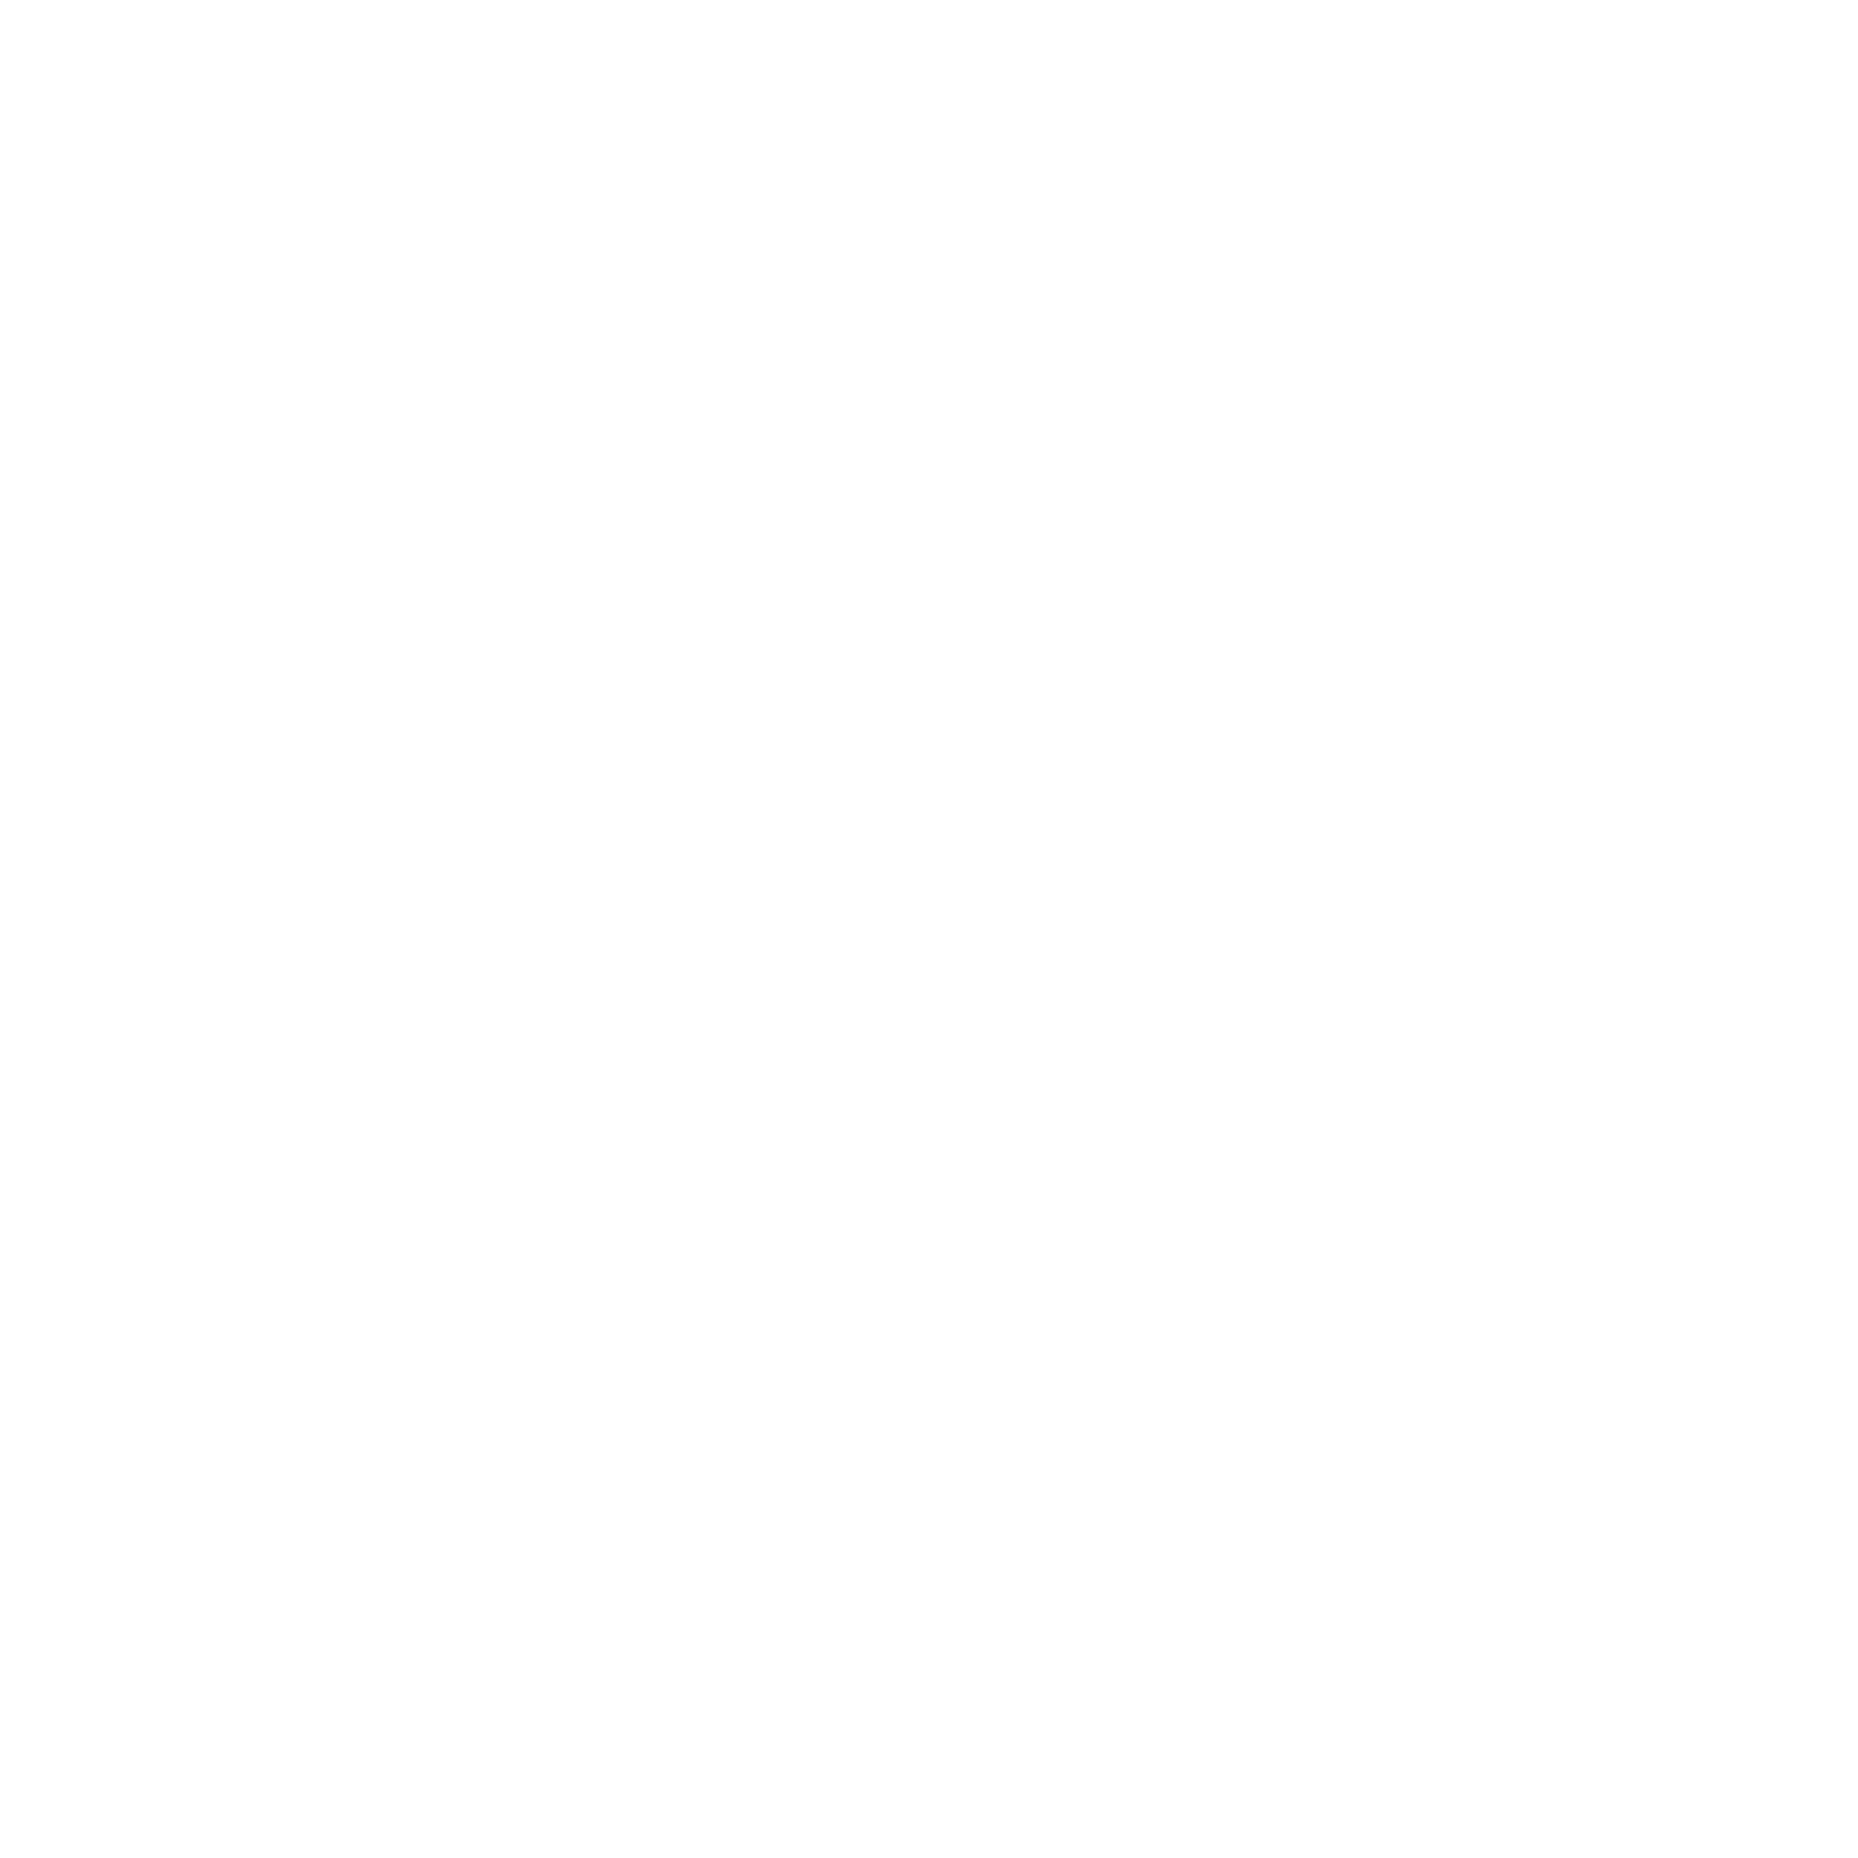 CULTURE HOUSE PORTAFOLIO